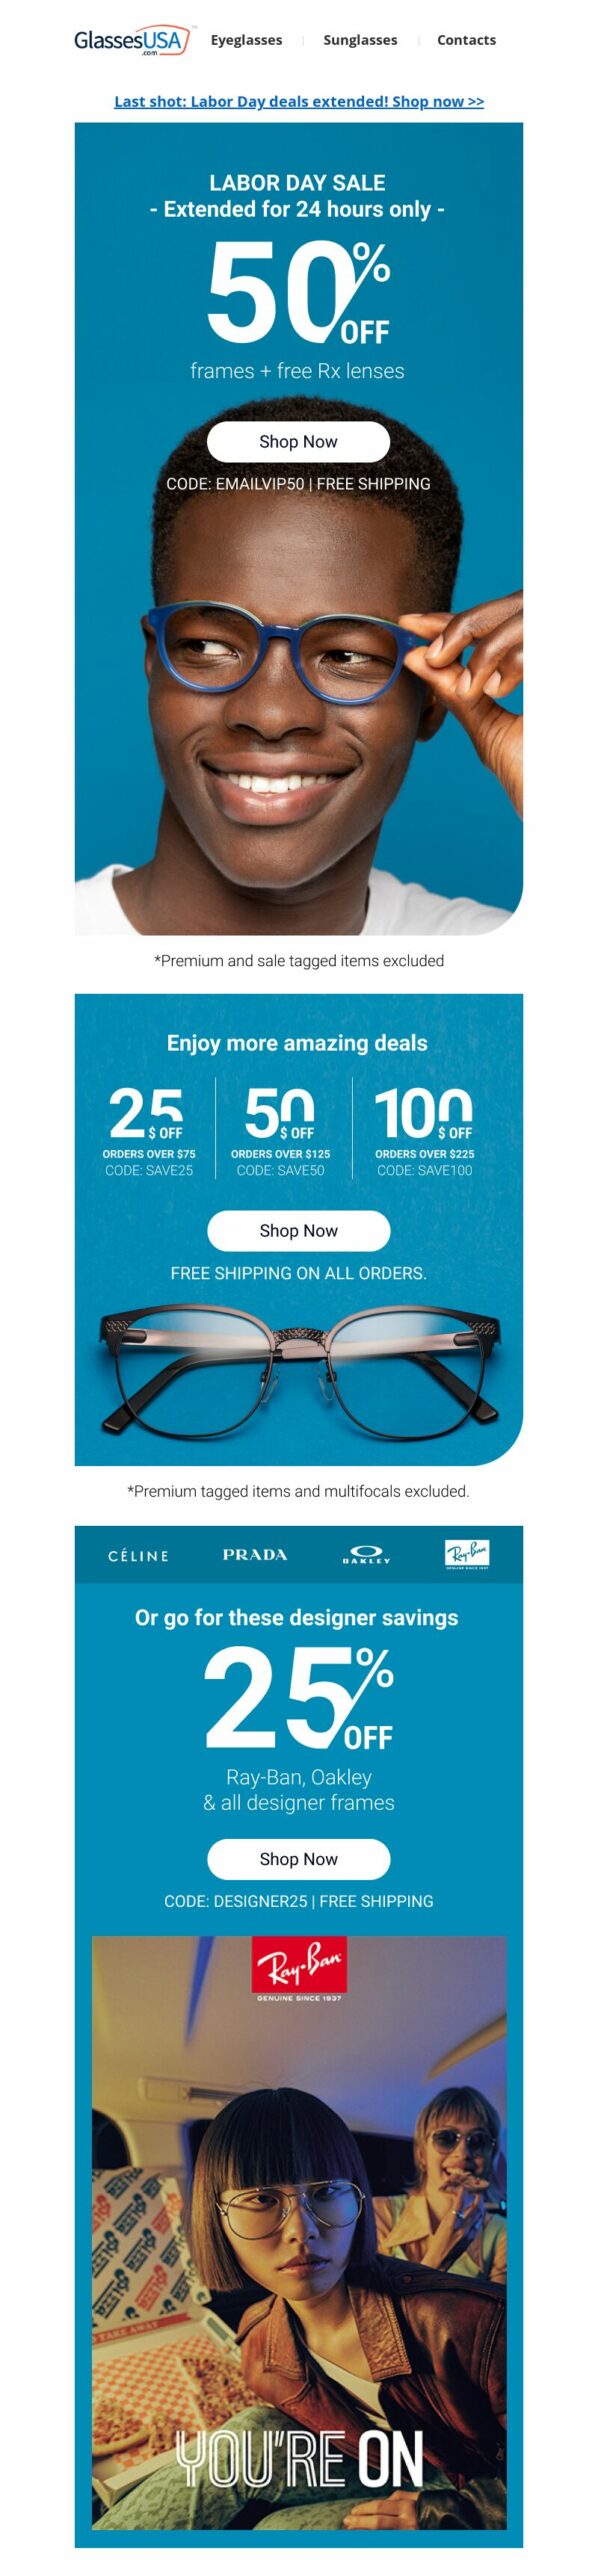 GlassesUSA, Labor Day sale email.
